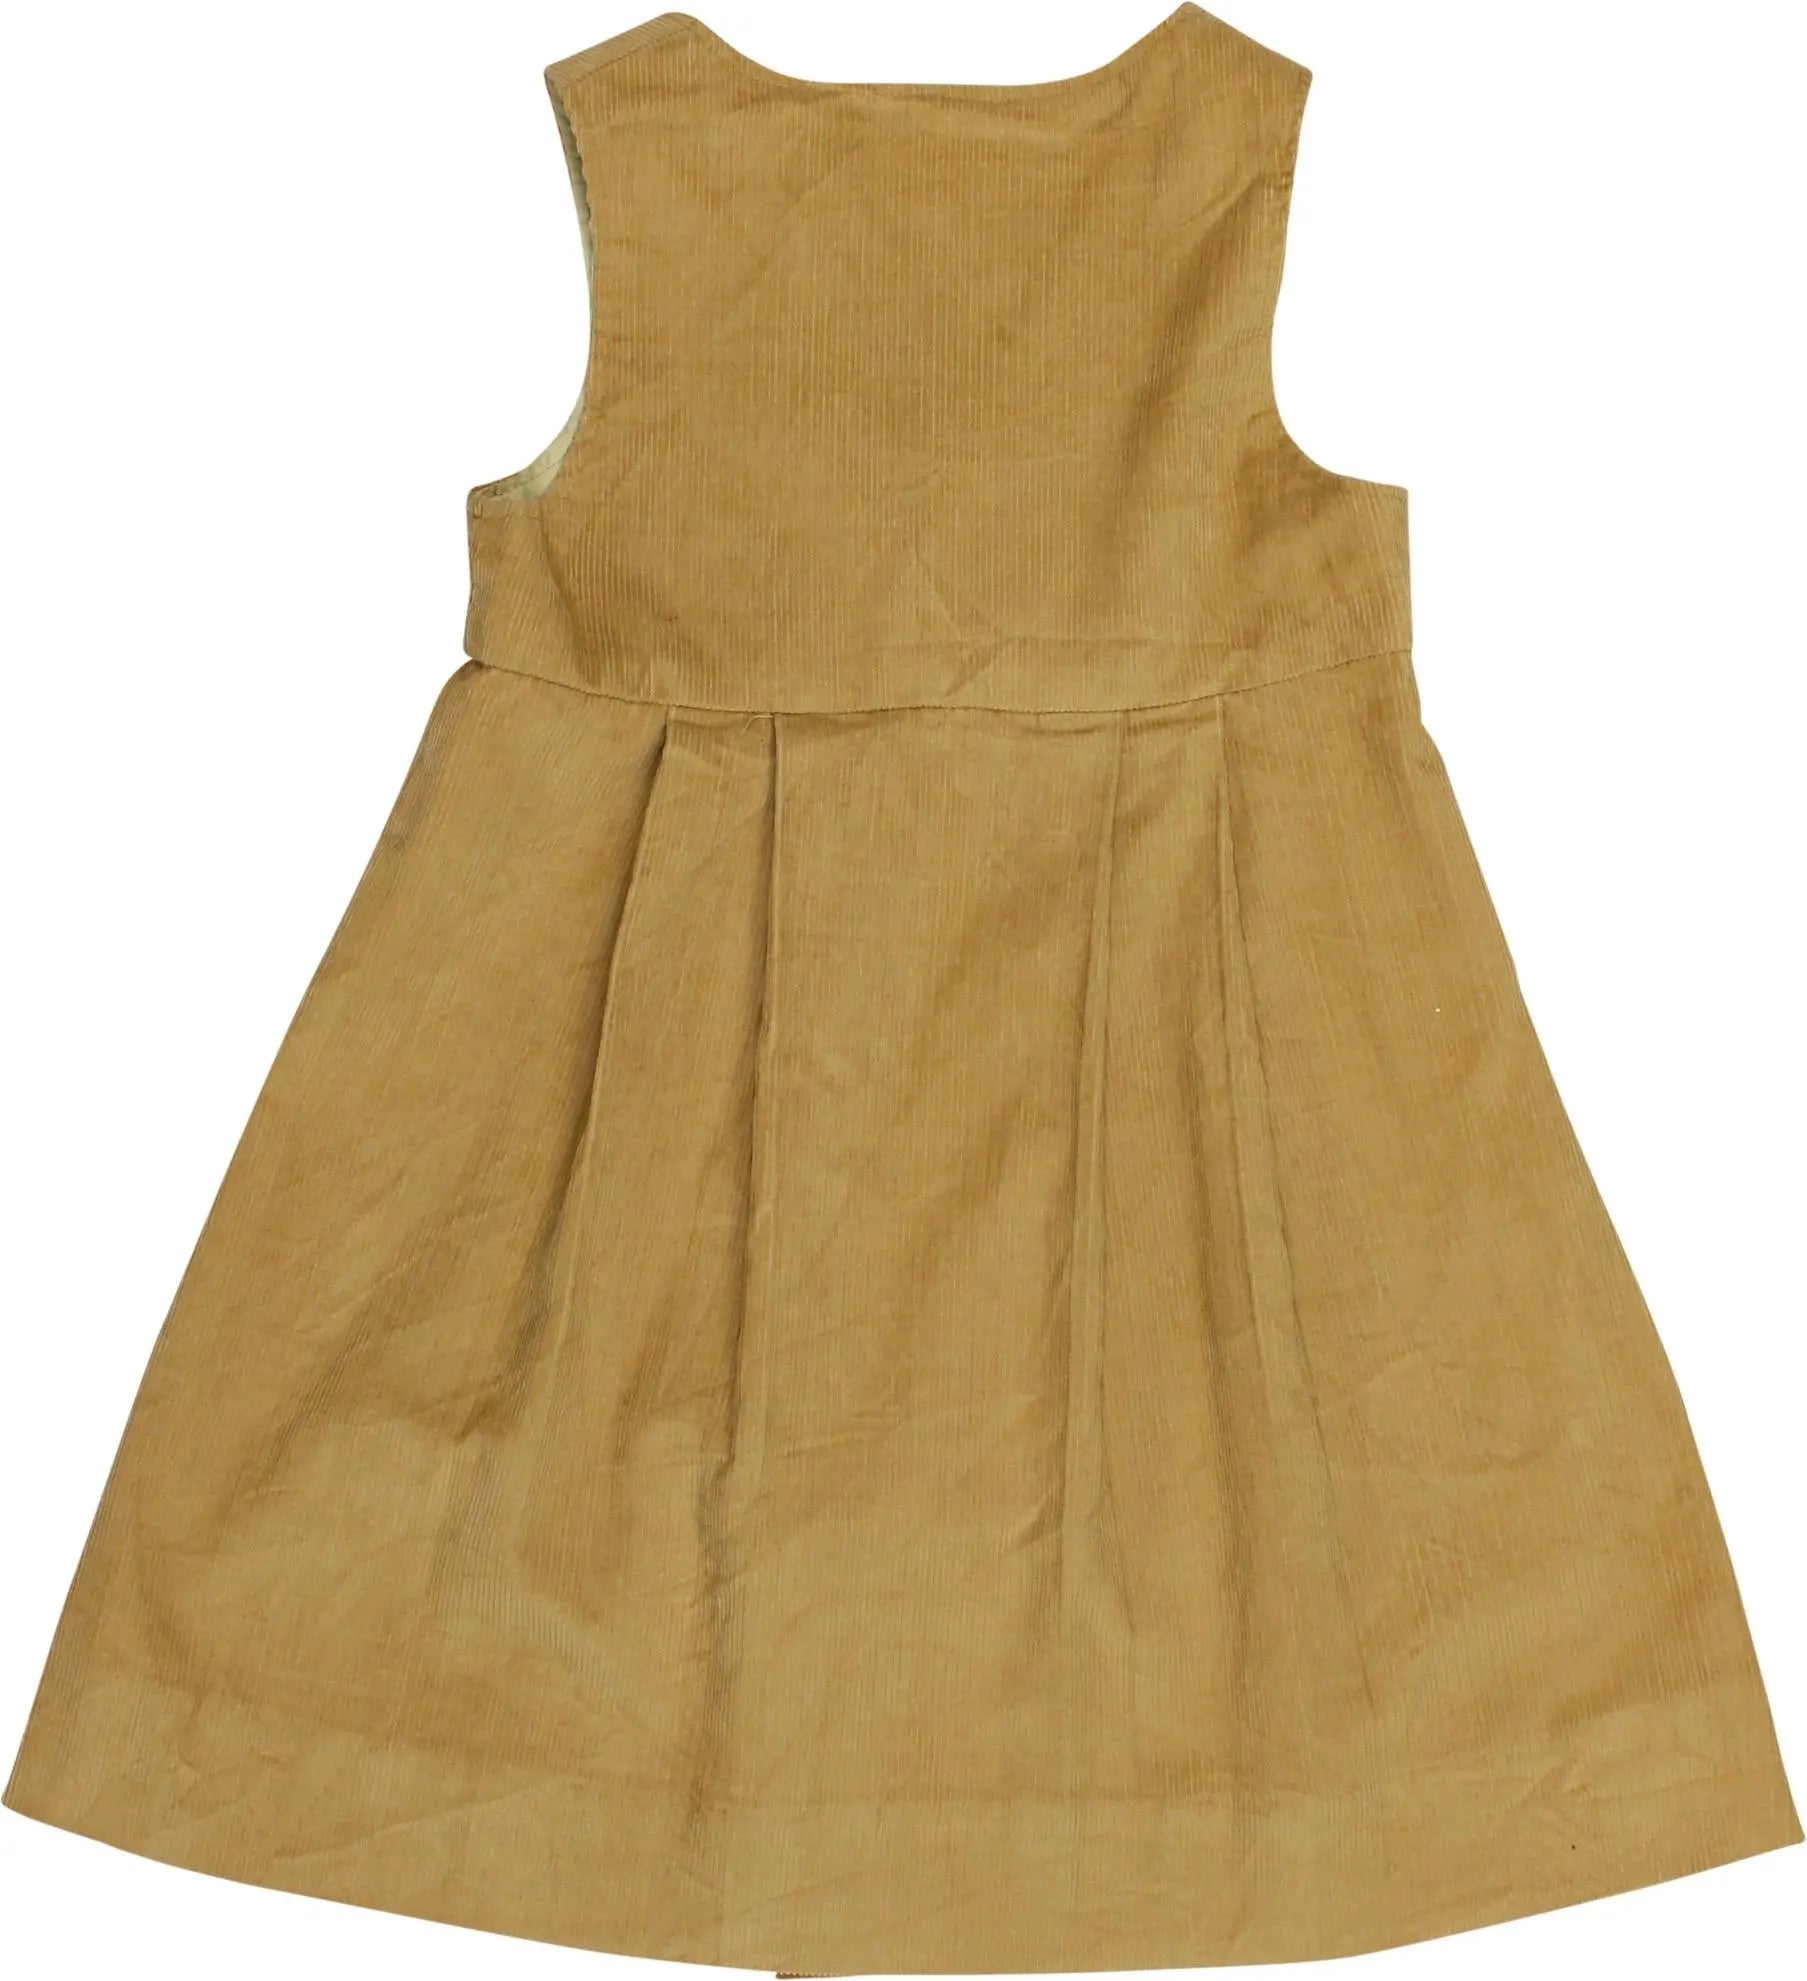 Marissa Ferrare - Dress- ThriftTale.com - Vintage and second handclothing